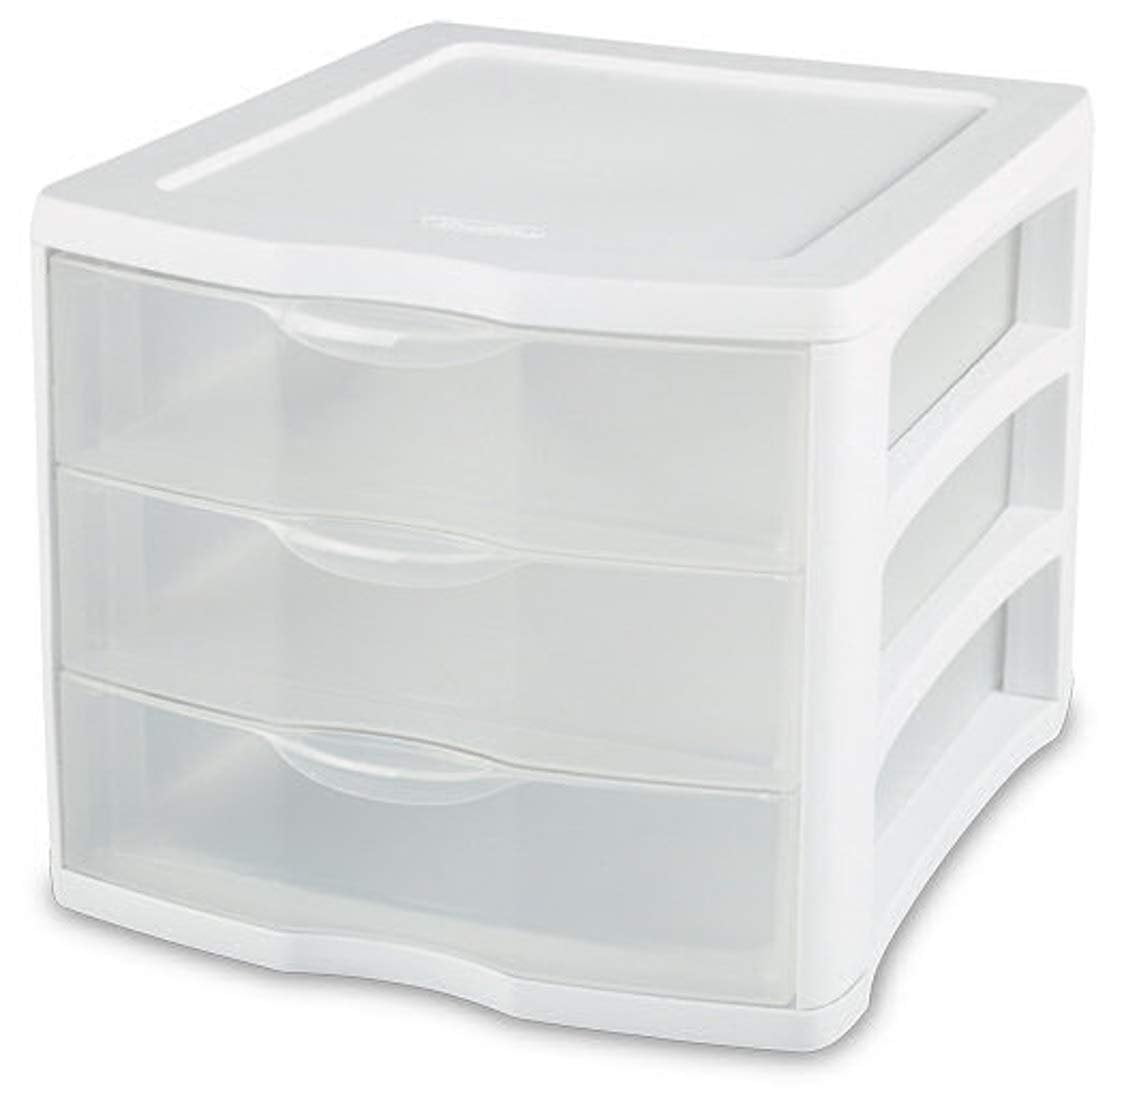 3 Unit Plastic Shelves Drawer Organizer Shelving Storage Solution